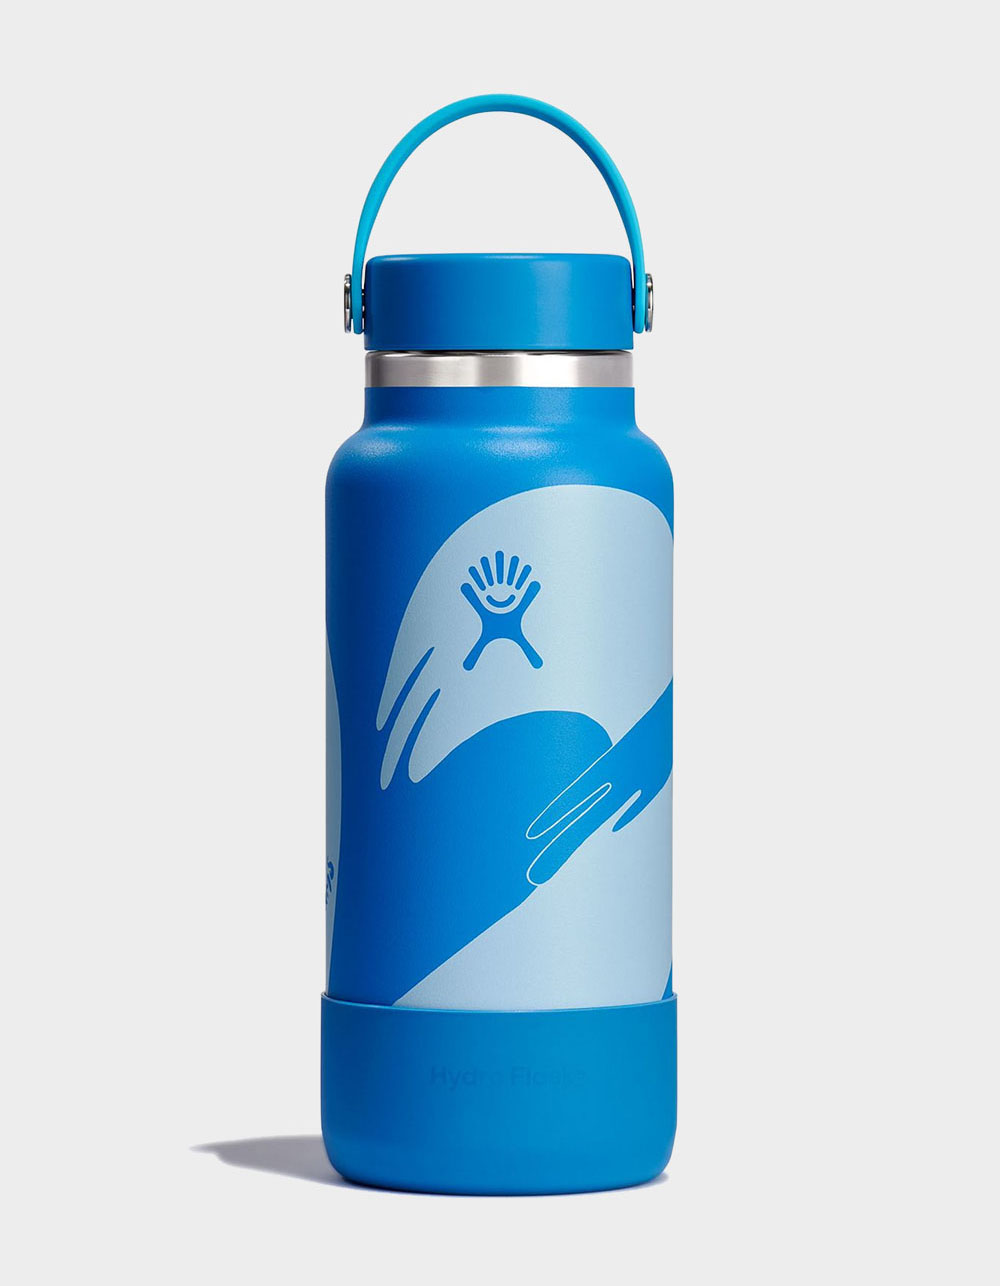 Hydro Flask Limited Edition Blue Waves 32oz